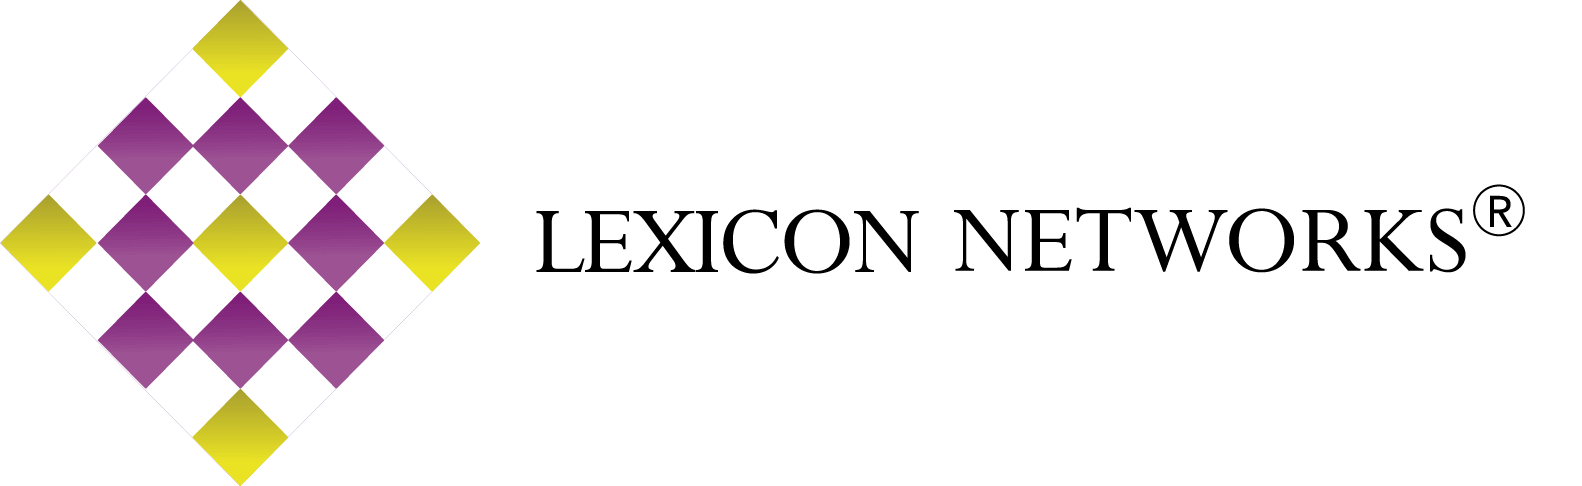 Lexicon Networks Inc.